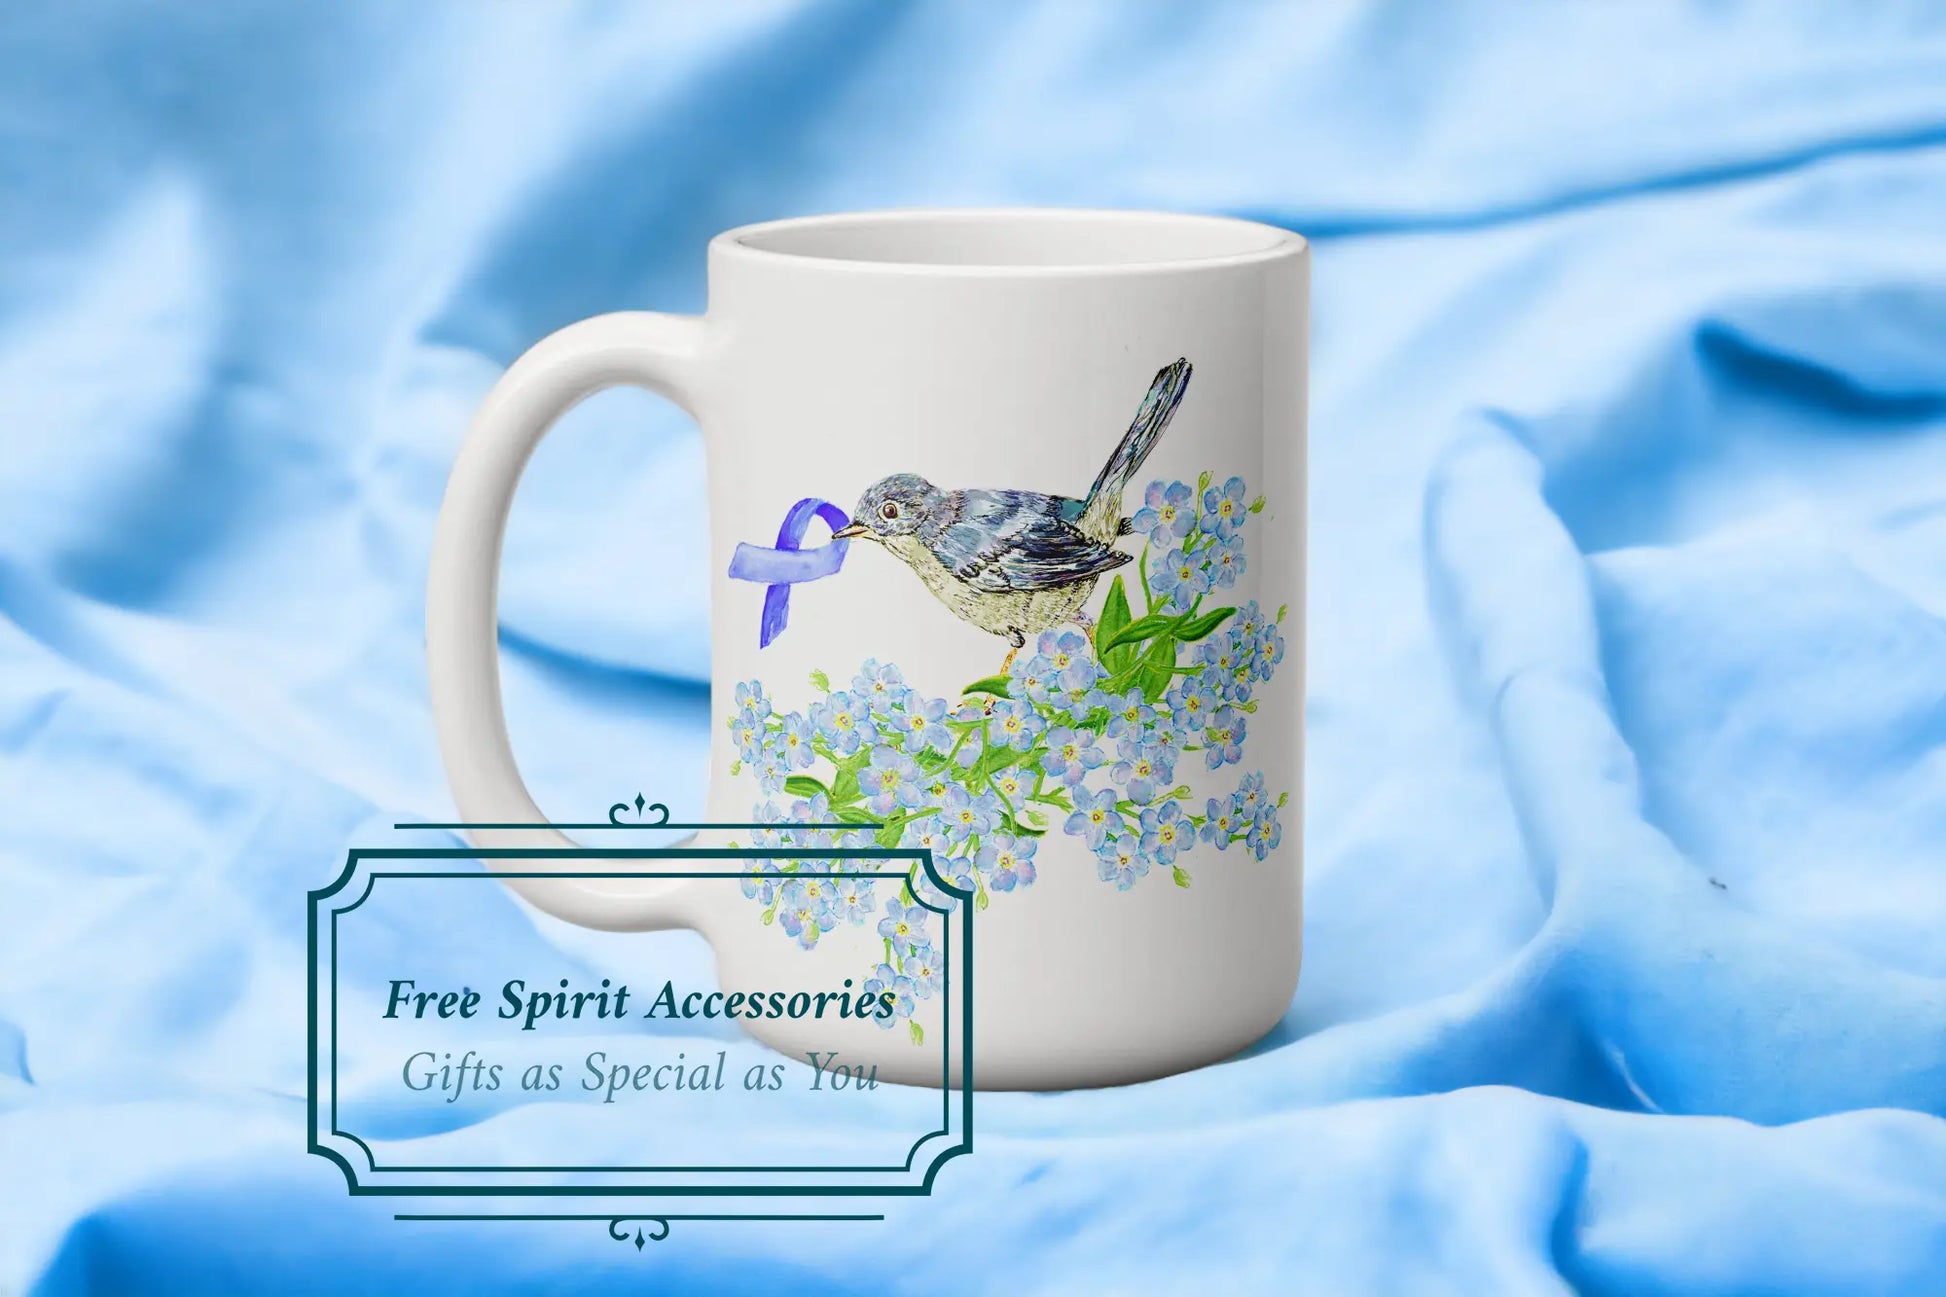  Alzheimer's Forget Me Knot Bird Mug by Free Spirit Accessories sold by Free Spirit Accessories